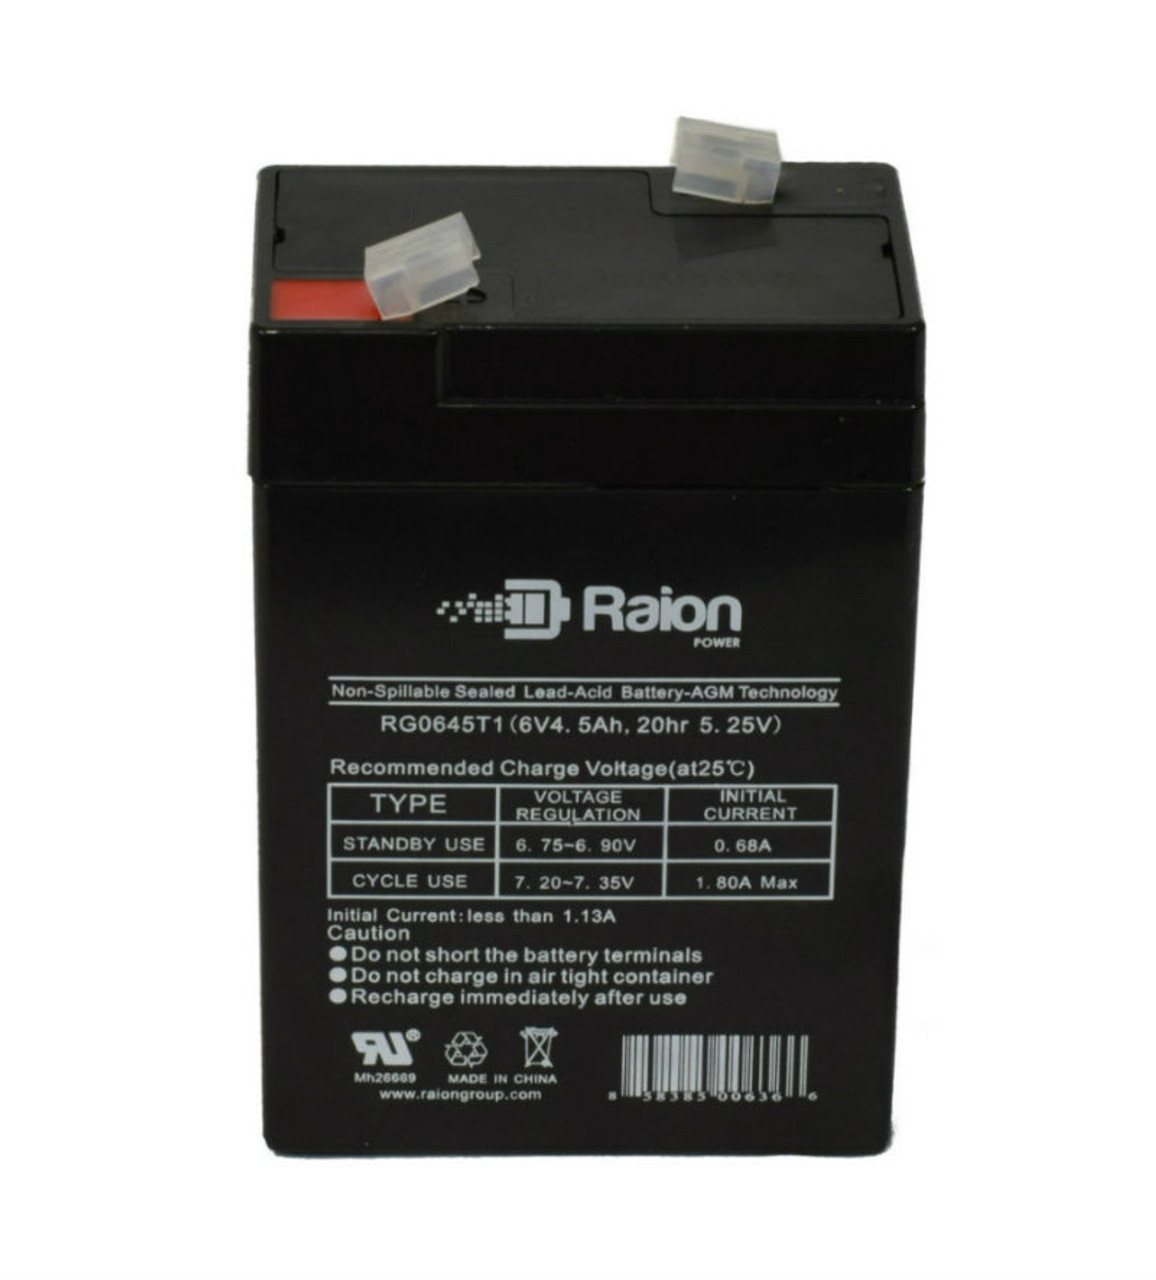 Raion Power RG0645T1 Replacement Battery Cartridge for Yuasa NP4-6-250